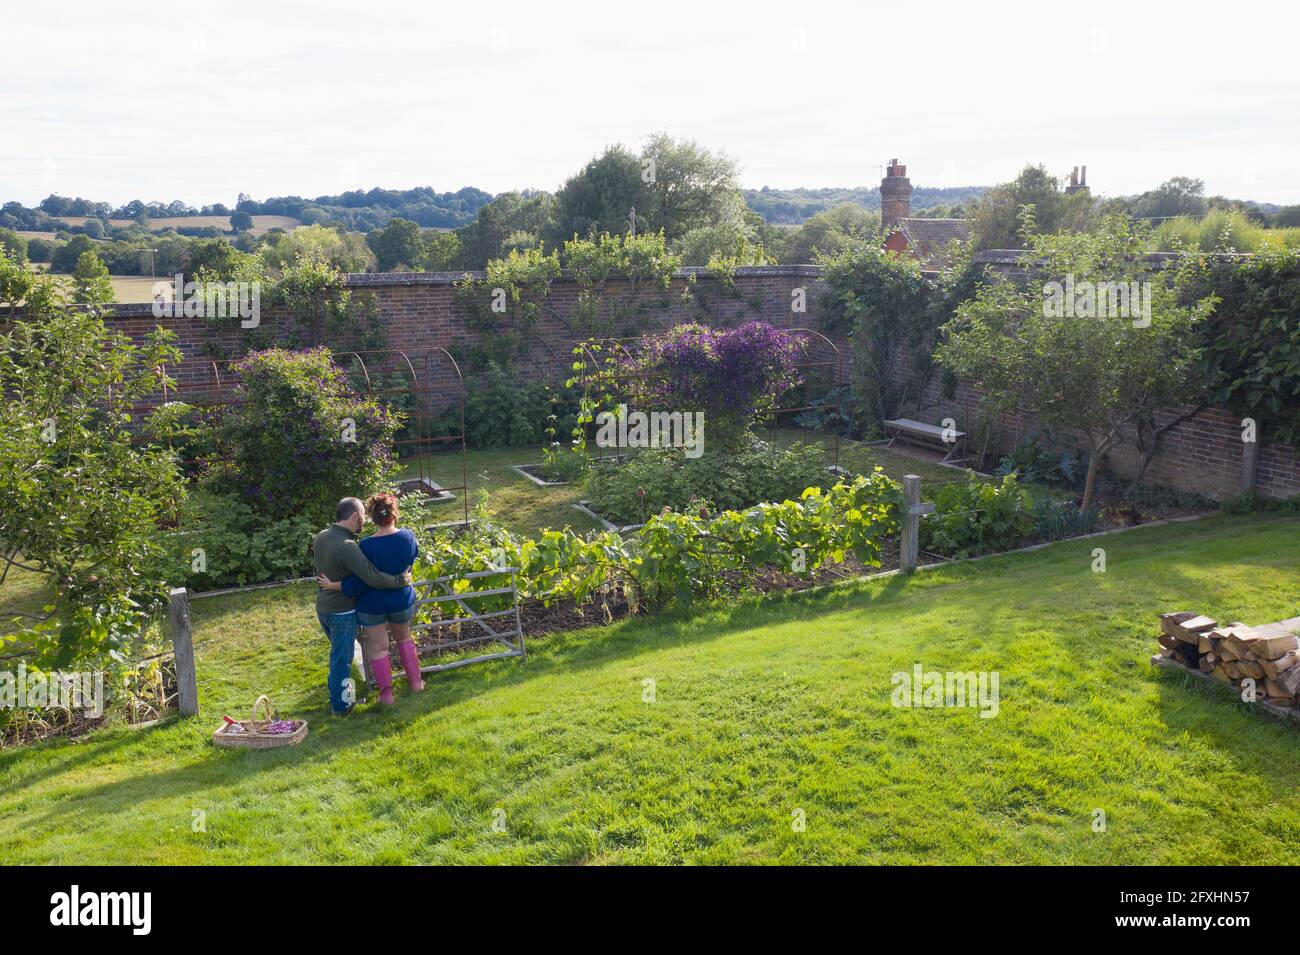 Affectionate couple in lush idyllic summer garden Stock Photo